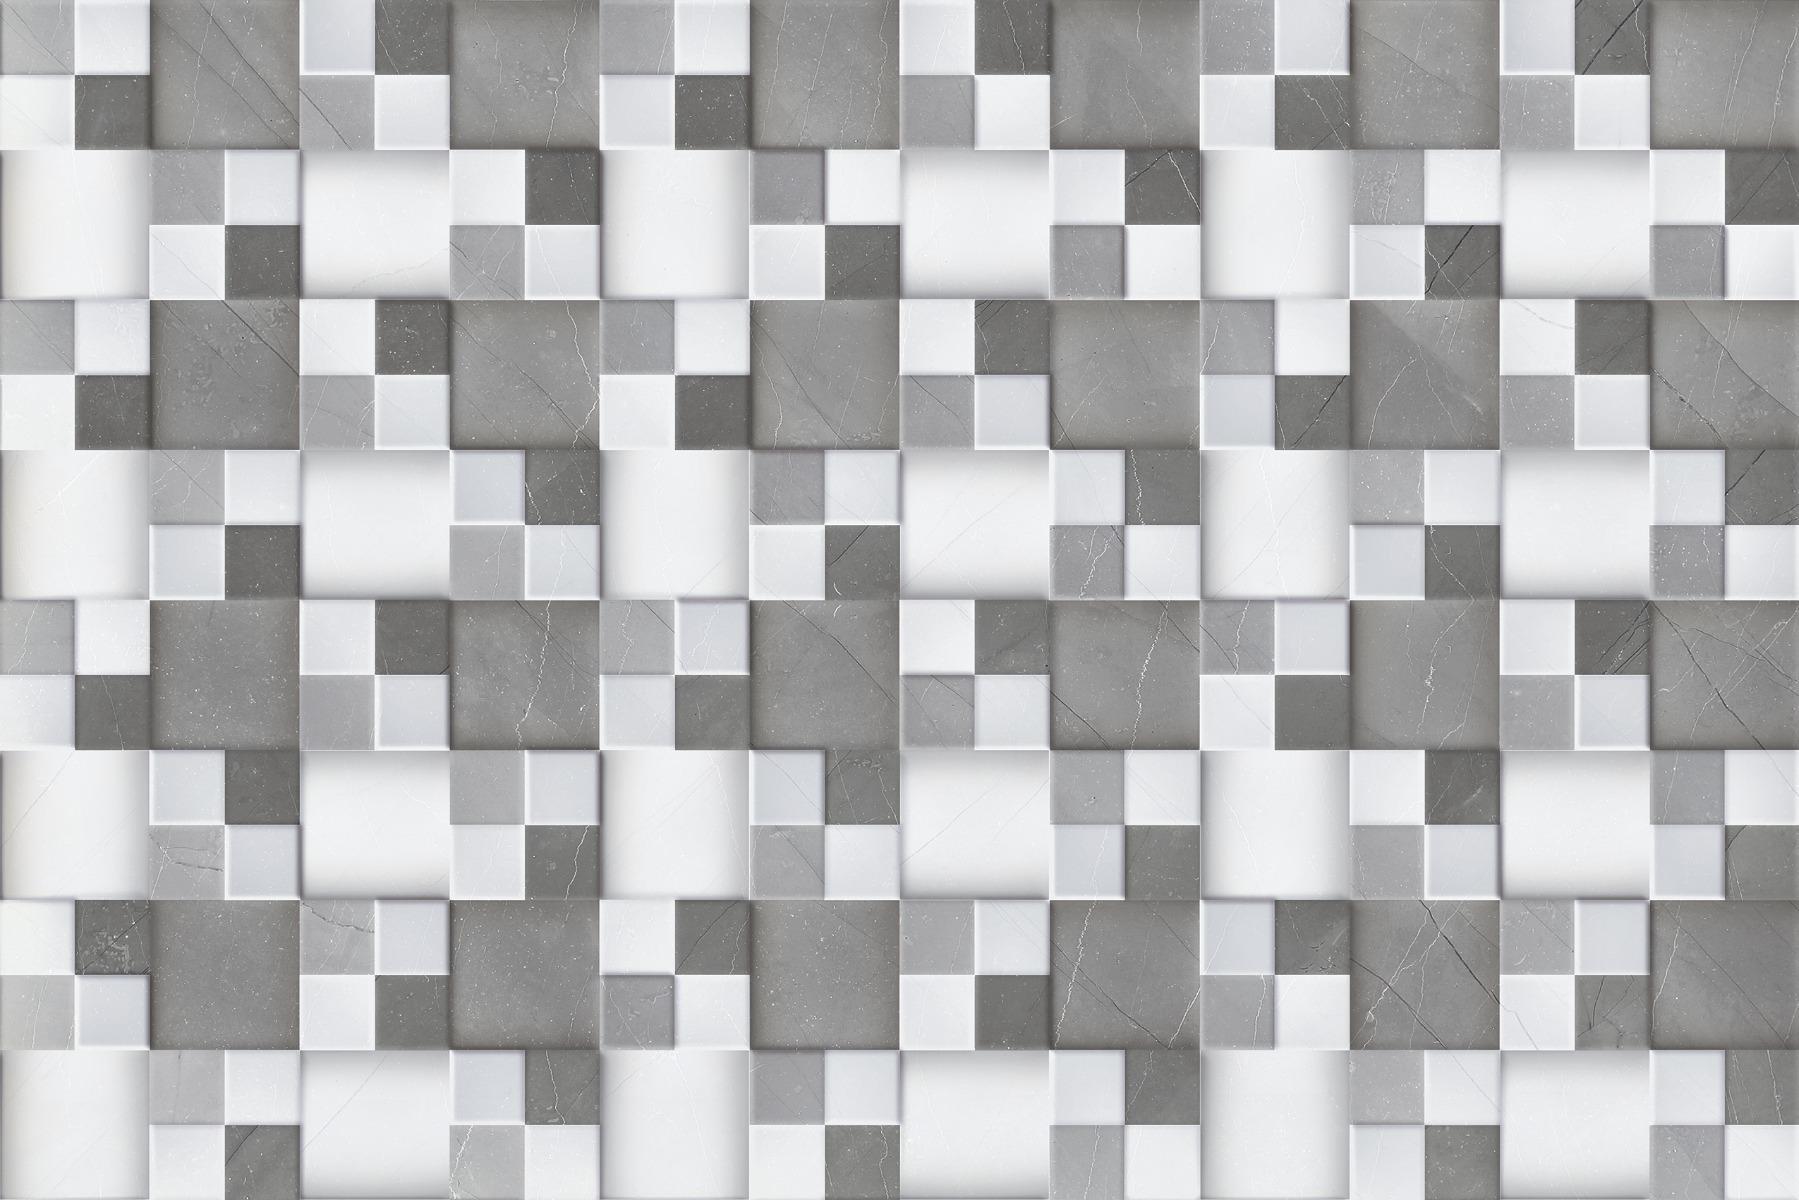 Cement Tiles for Bathroom Tiles, Kitchen Tiles, Accent Tiles, Dining Room Tiles